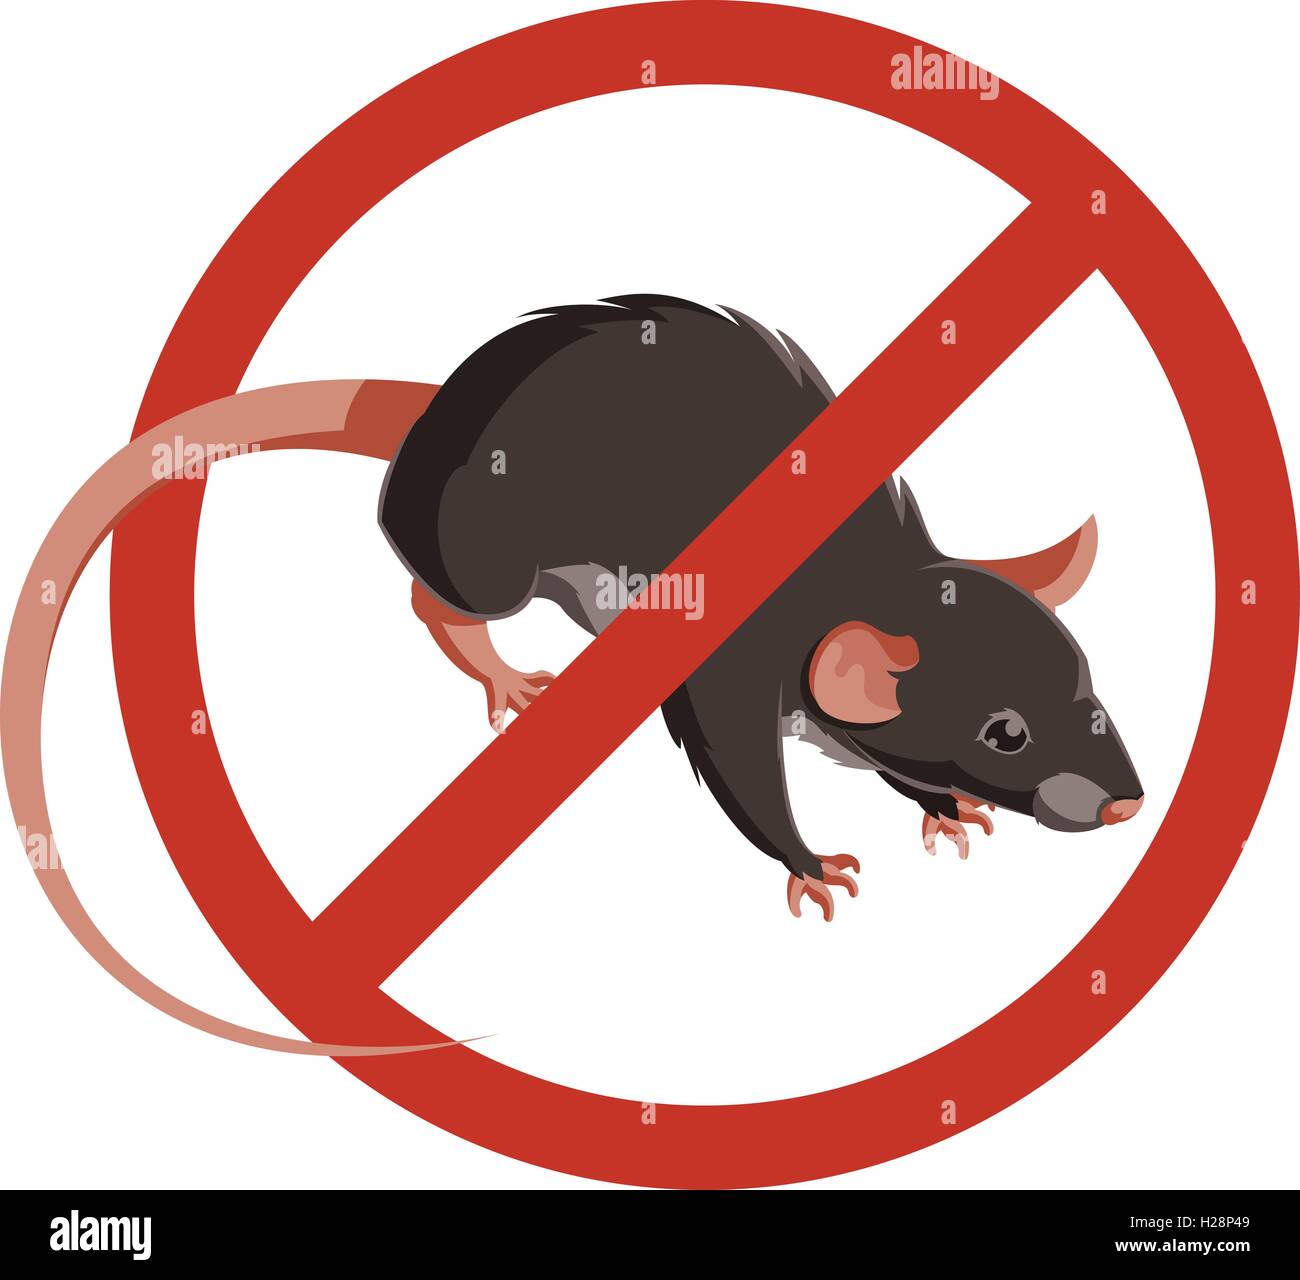 Rat forbidden sign icon Stock Vector